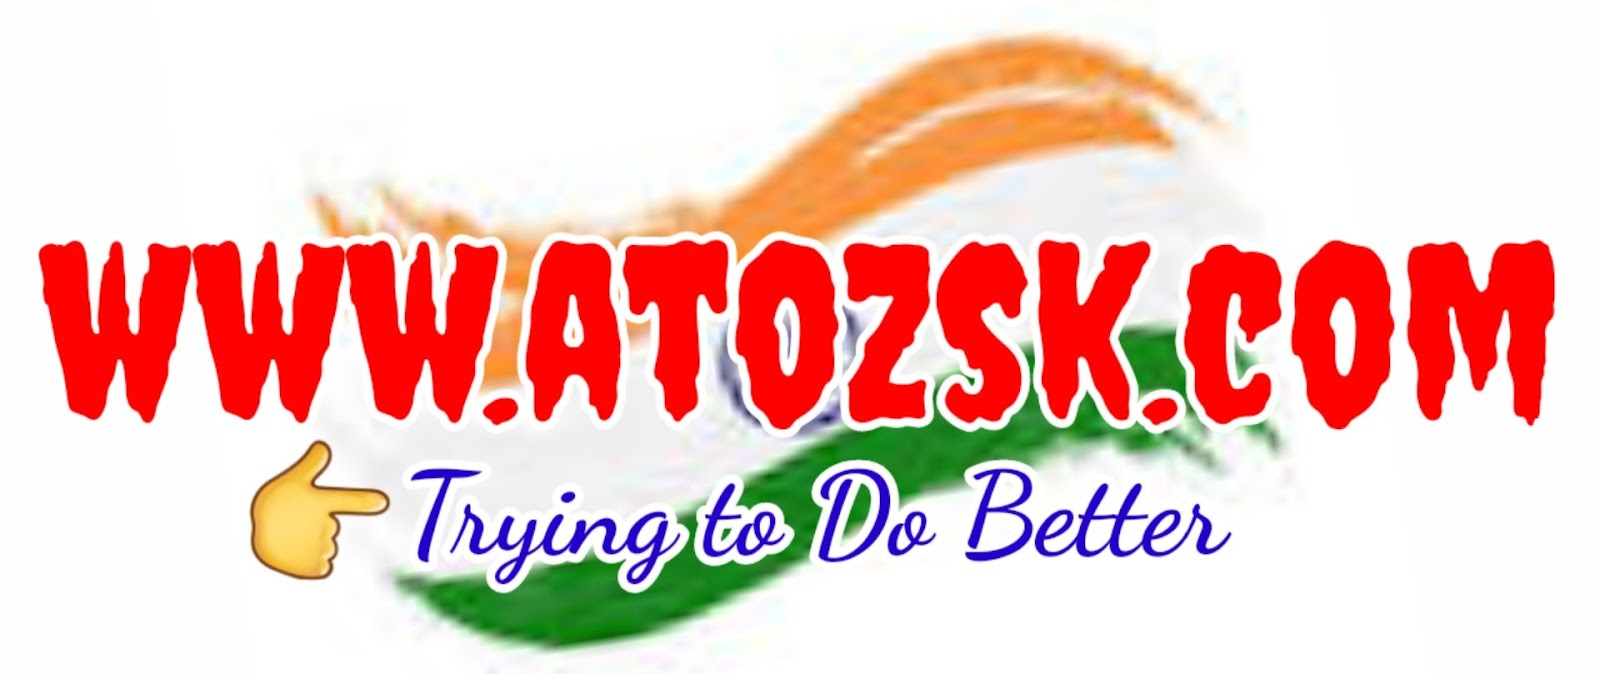 atozsk.com Latest Educational Viral News Intesting Facts 